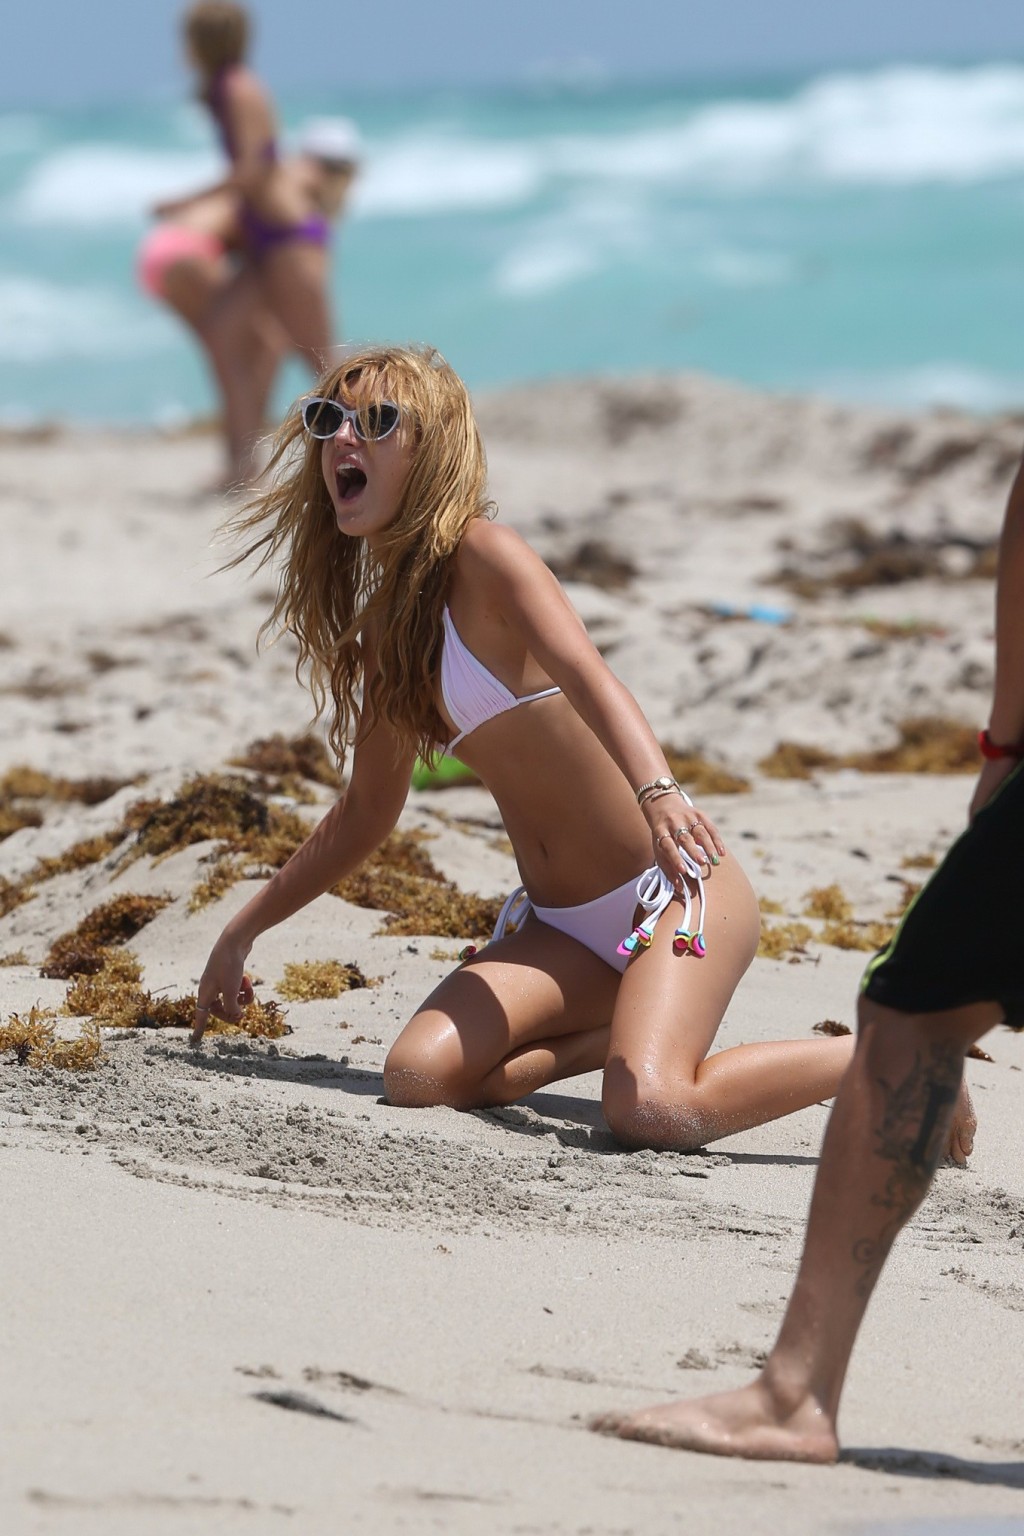 Bella thorne luce sexy con un diminuto bikini blanco en la playa de miami
 #75196099